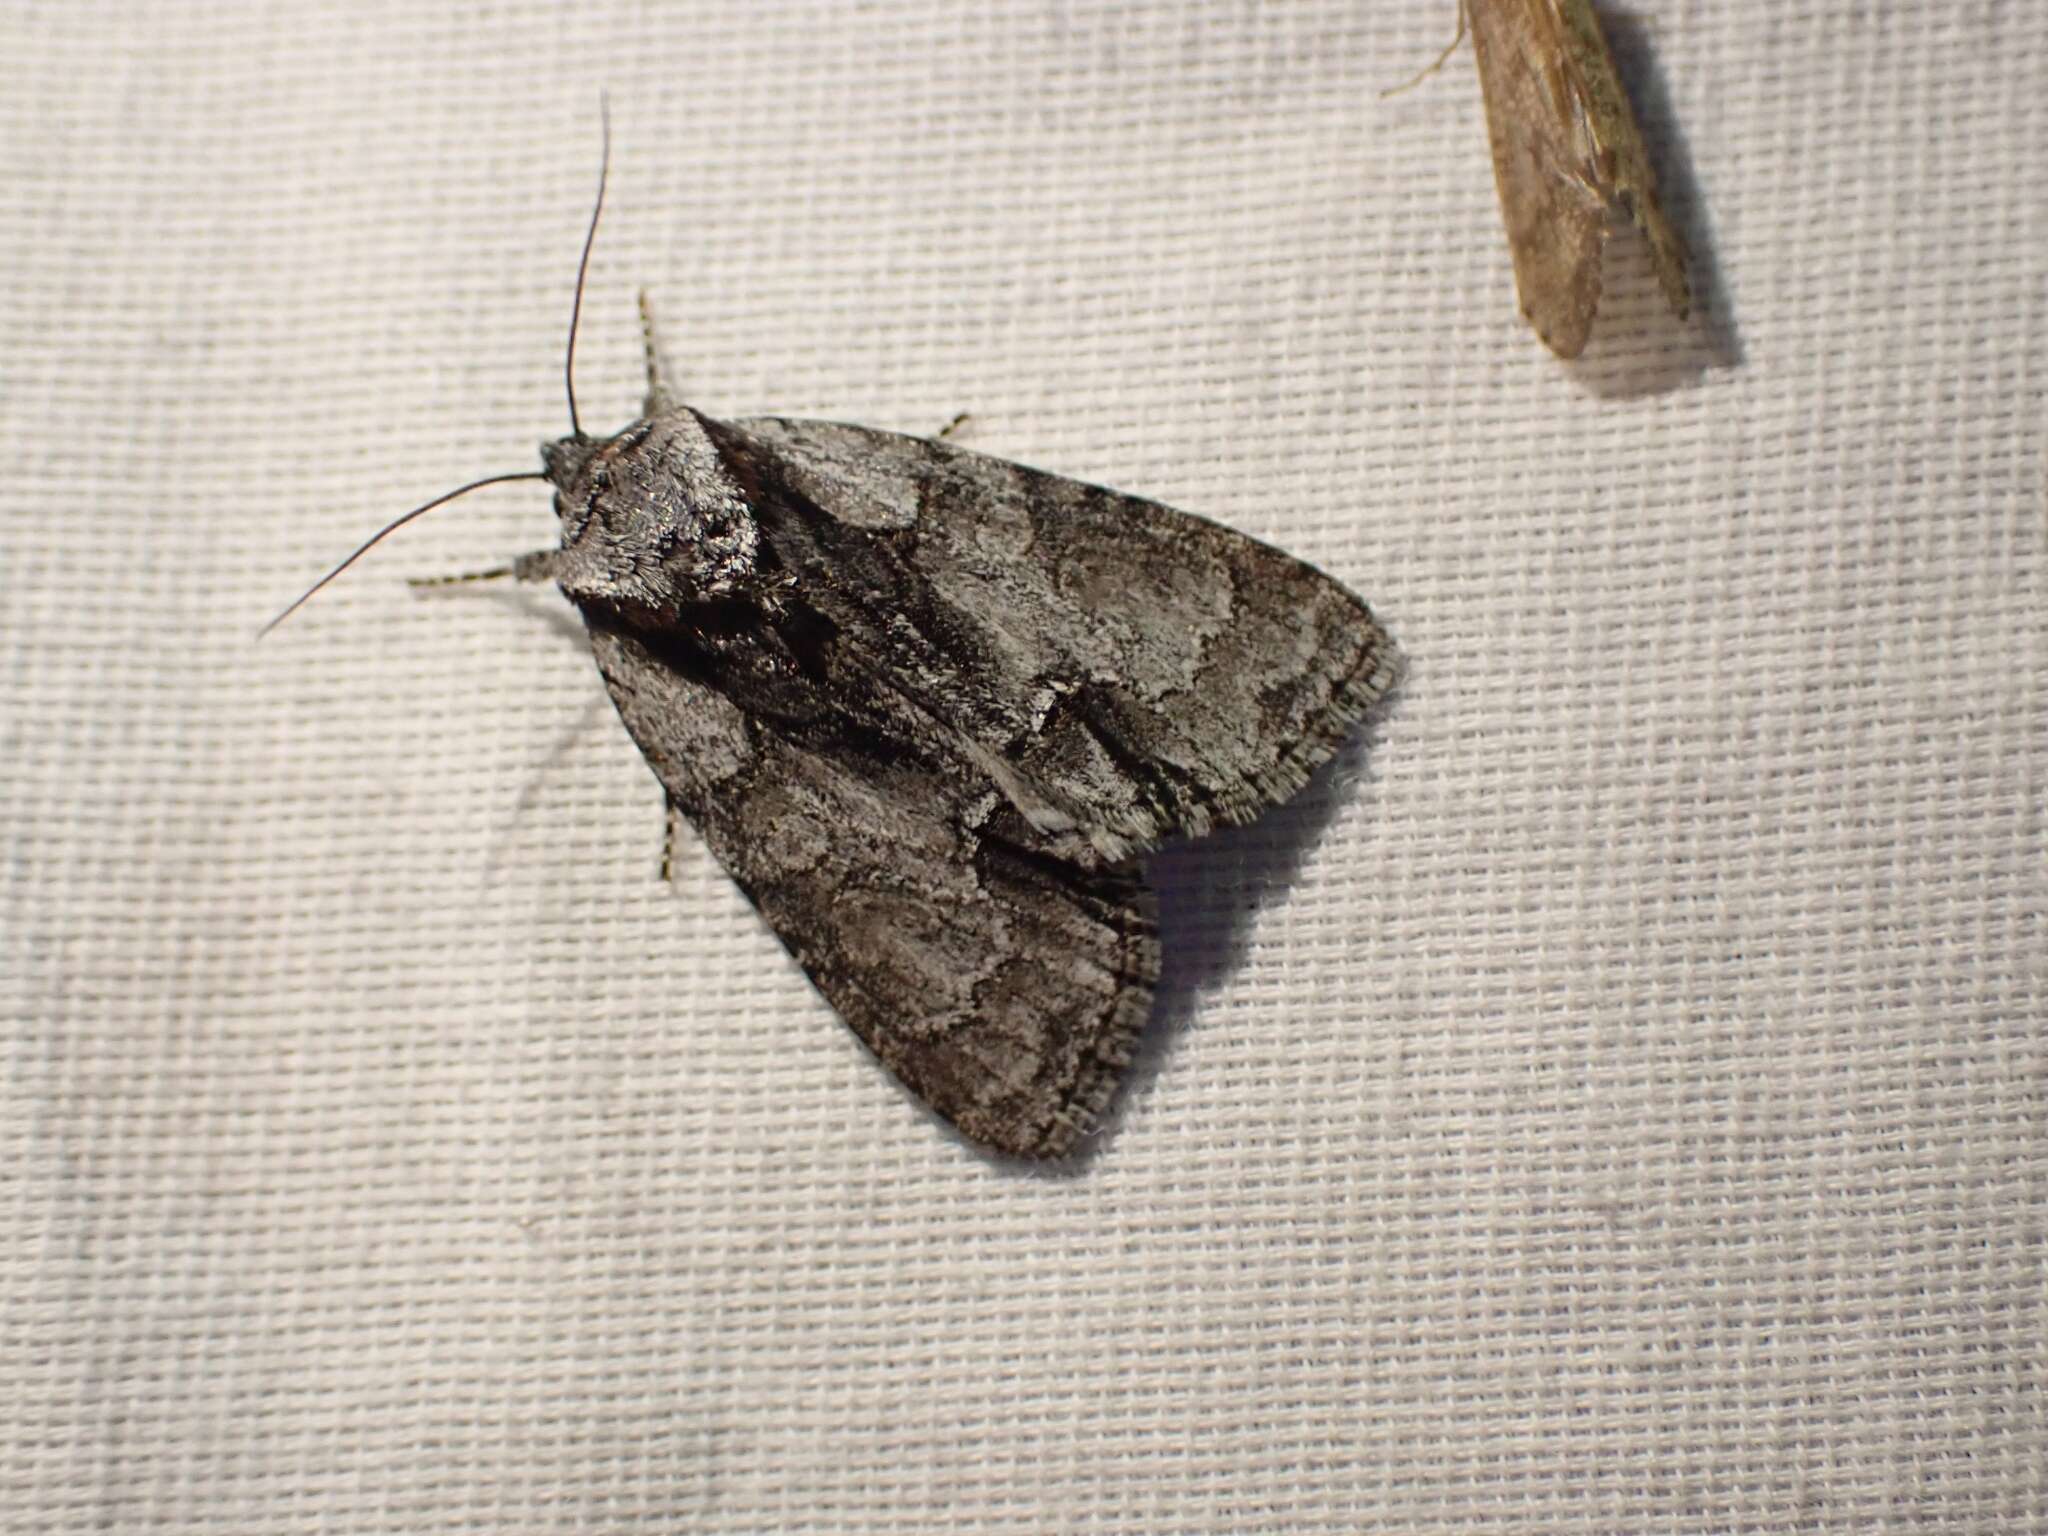 Image of Gentle Dagger Moth